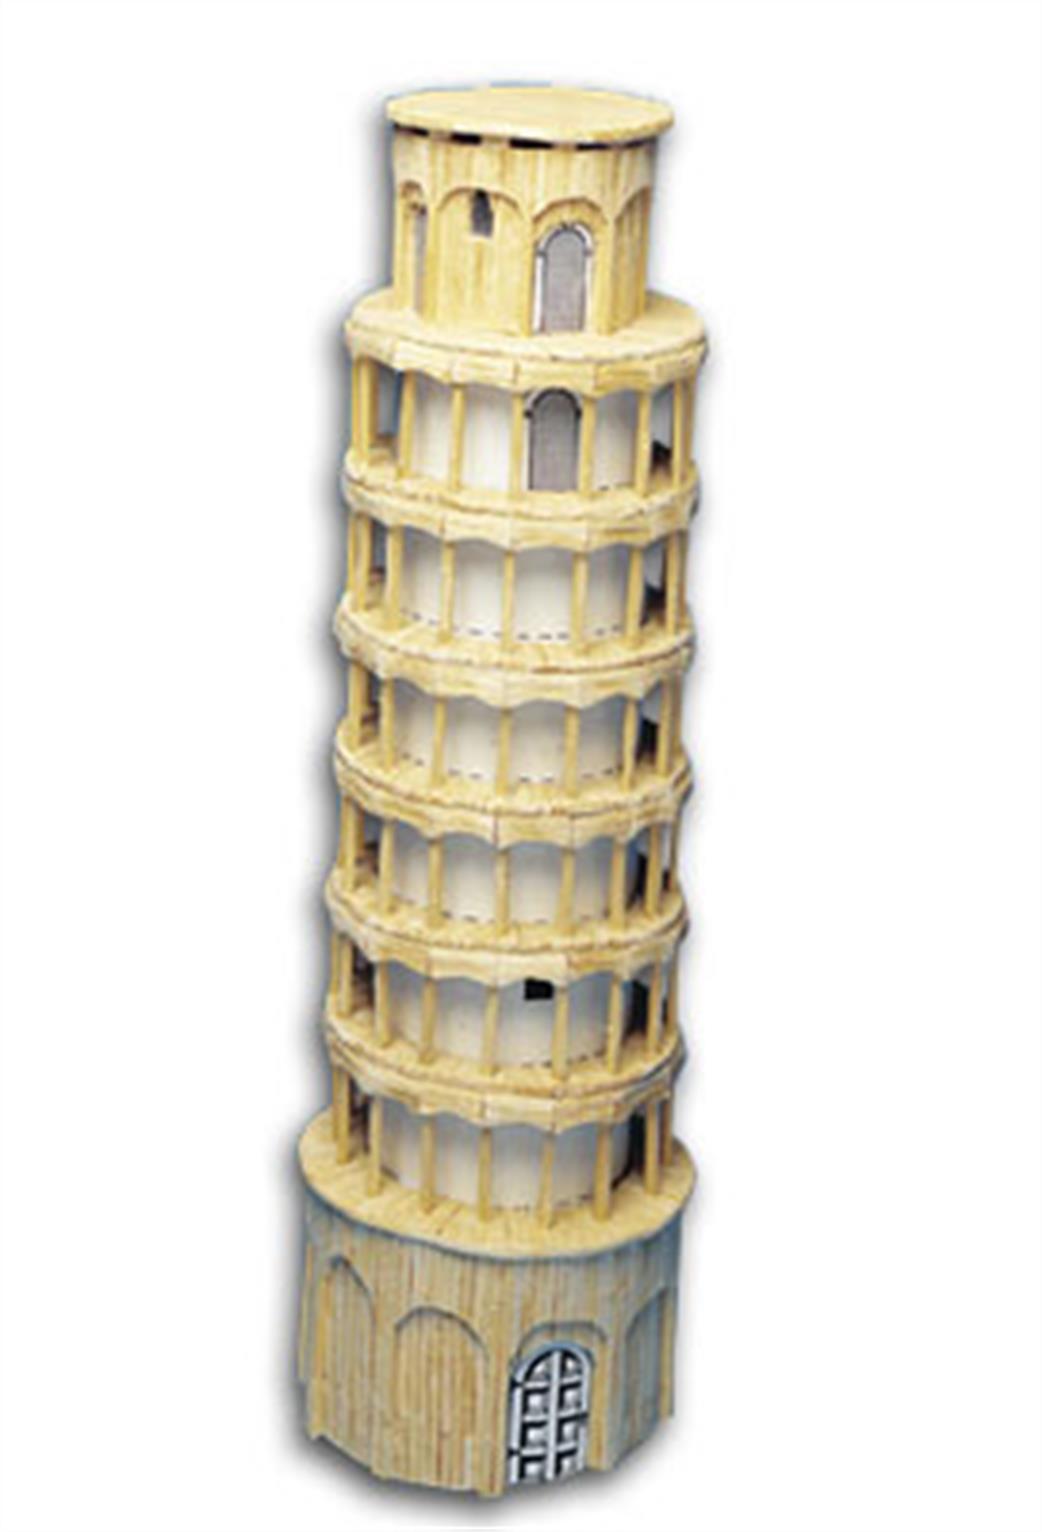 Matchcraft  11532 Tower of Pisa Matchstick Kit